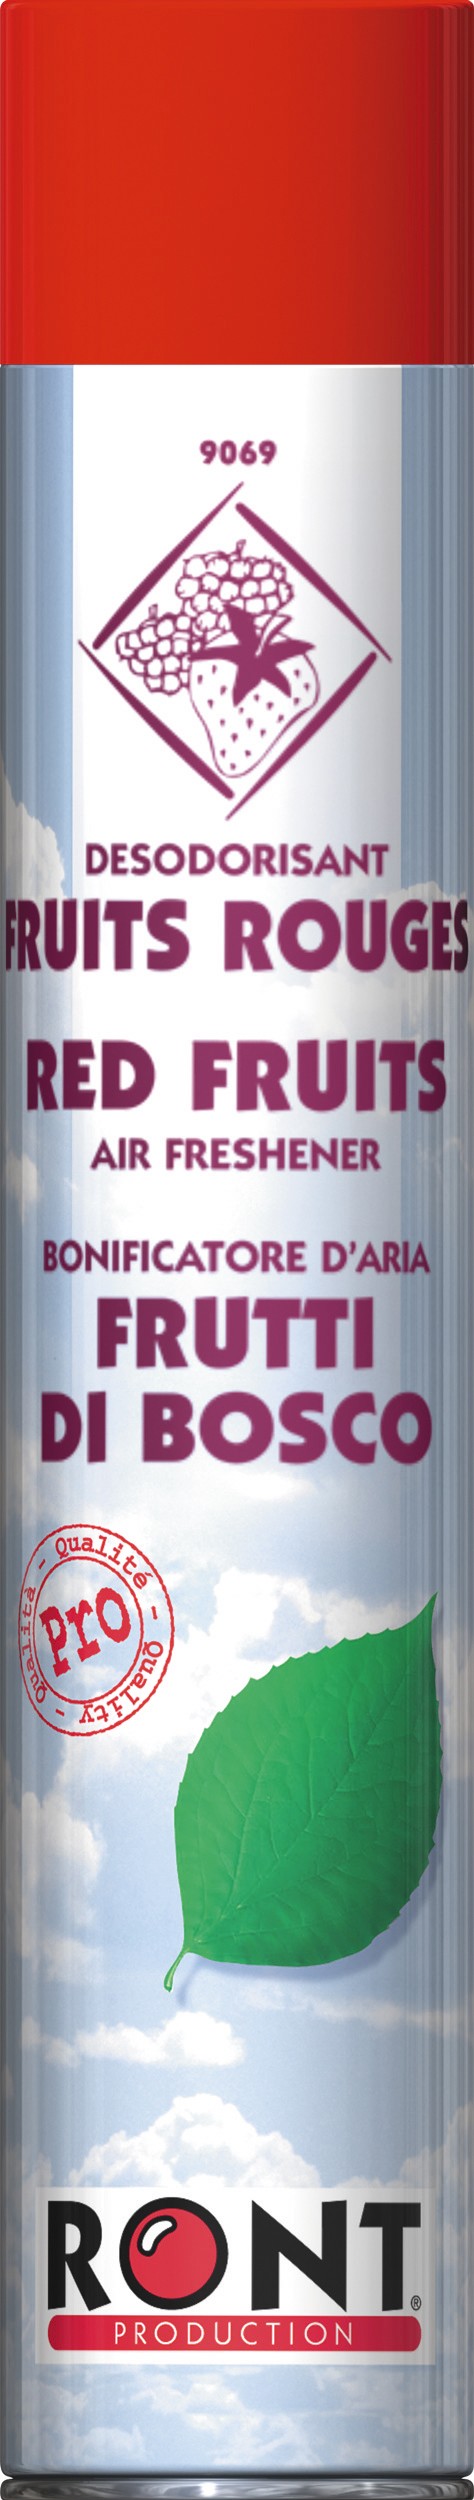 DESODORISANT Fruits rouges - Aérosol 1 000 mL